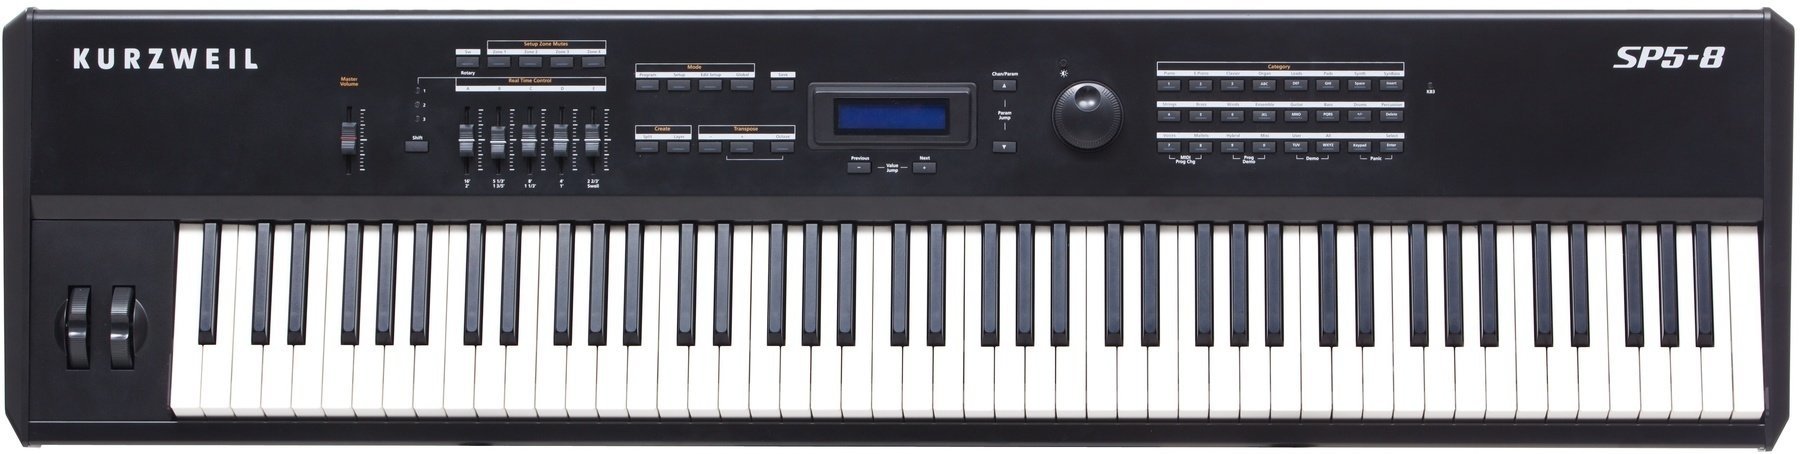 Piano de scène Kurzweil SP5-8